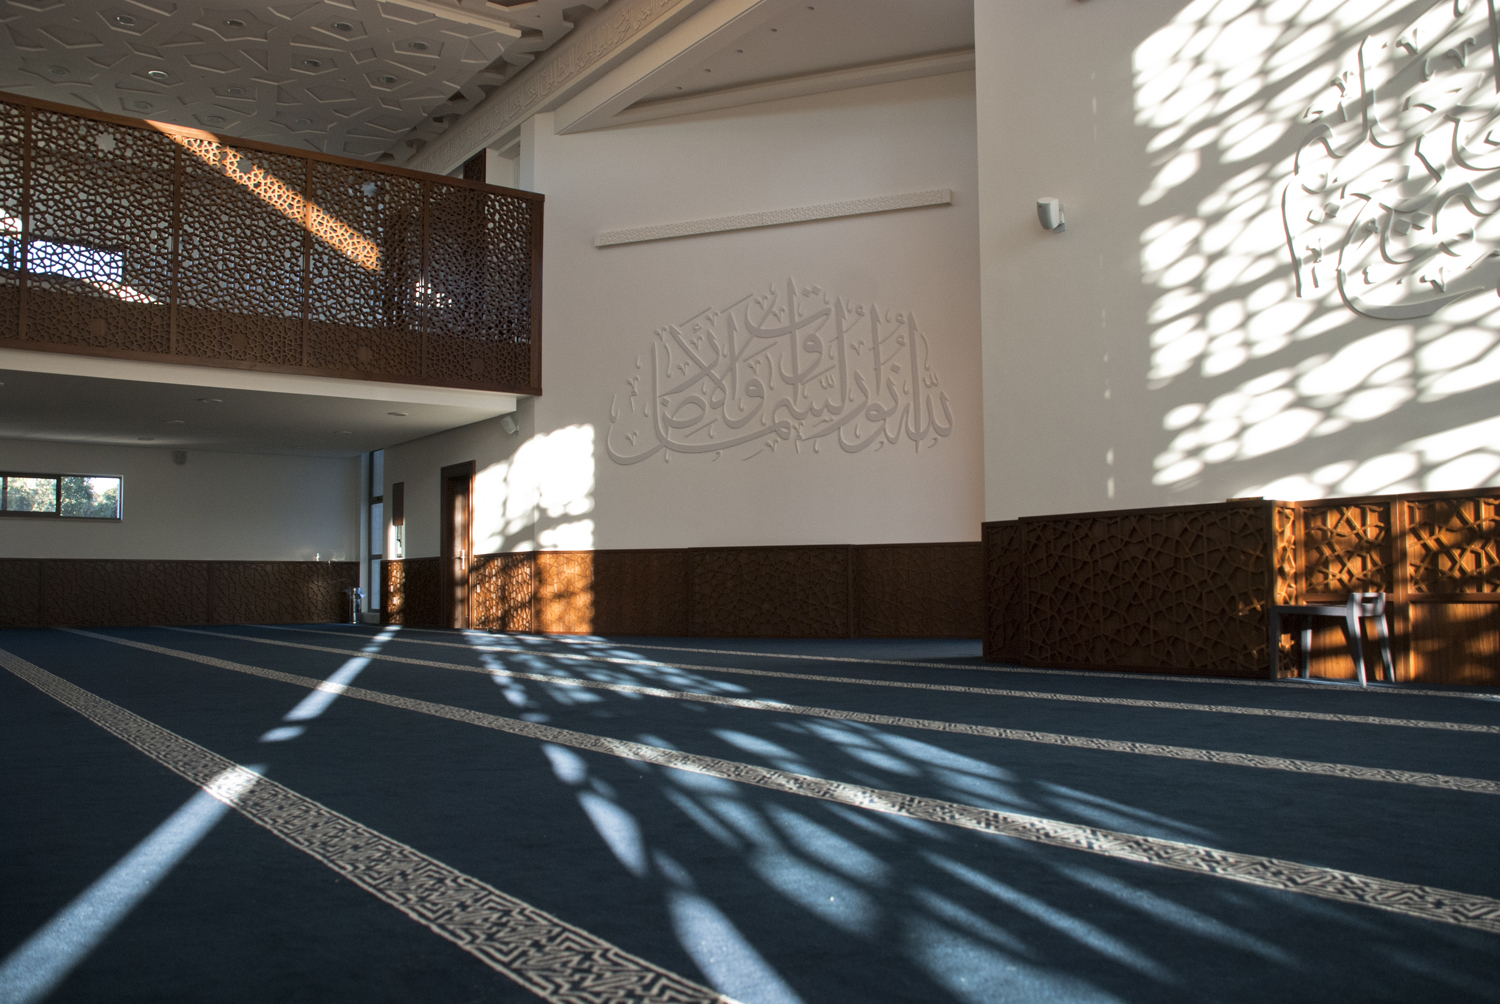 Morning sunlight penetrating the patterned freestanding façade into the prayer hall